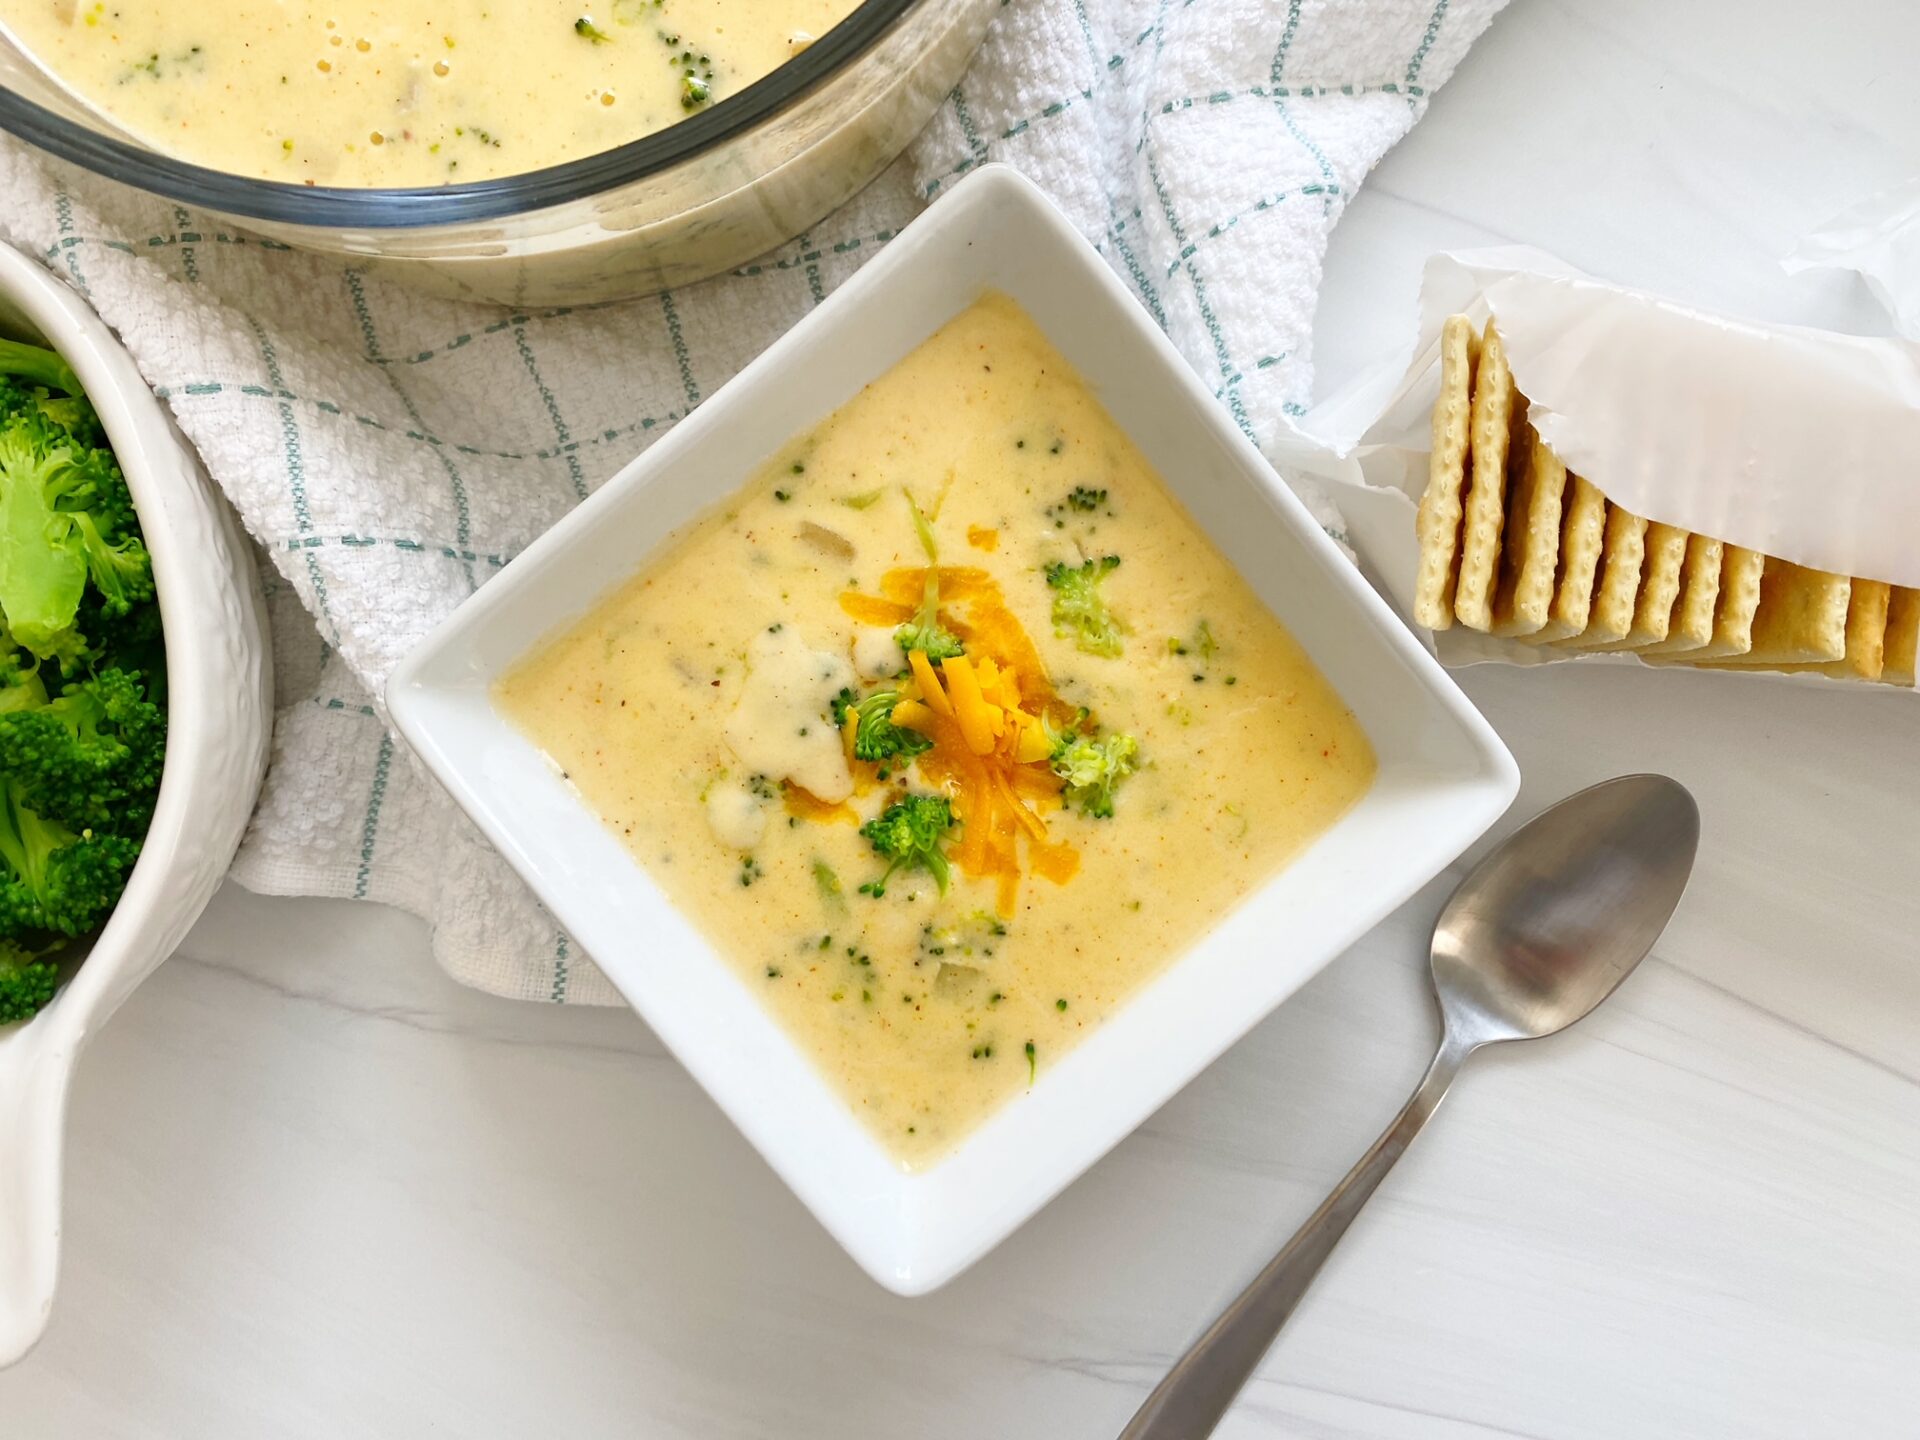 Broccoli cheese soup in a square bowl.